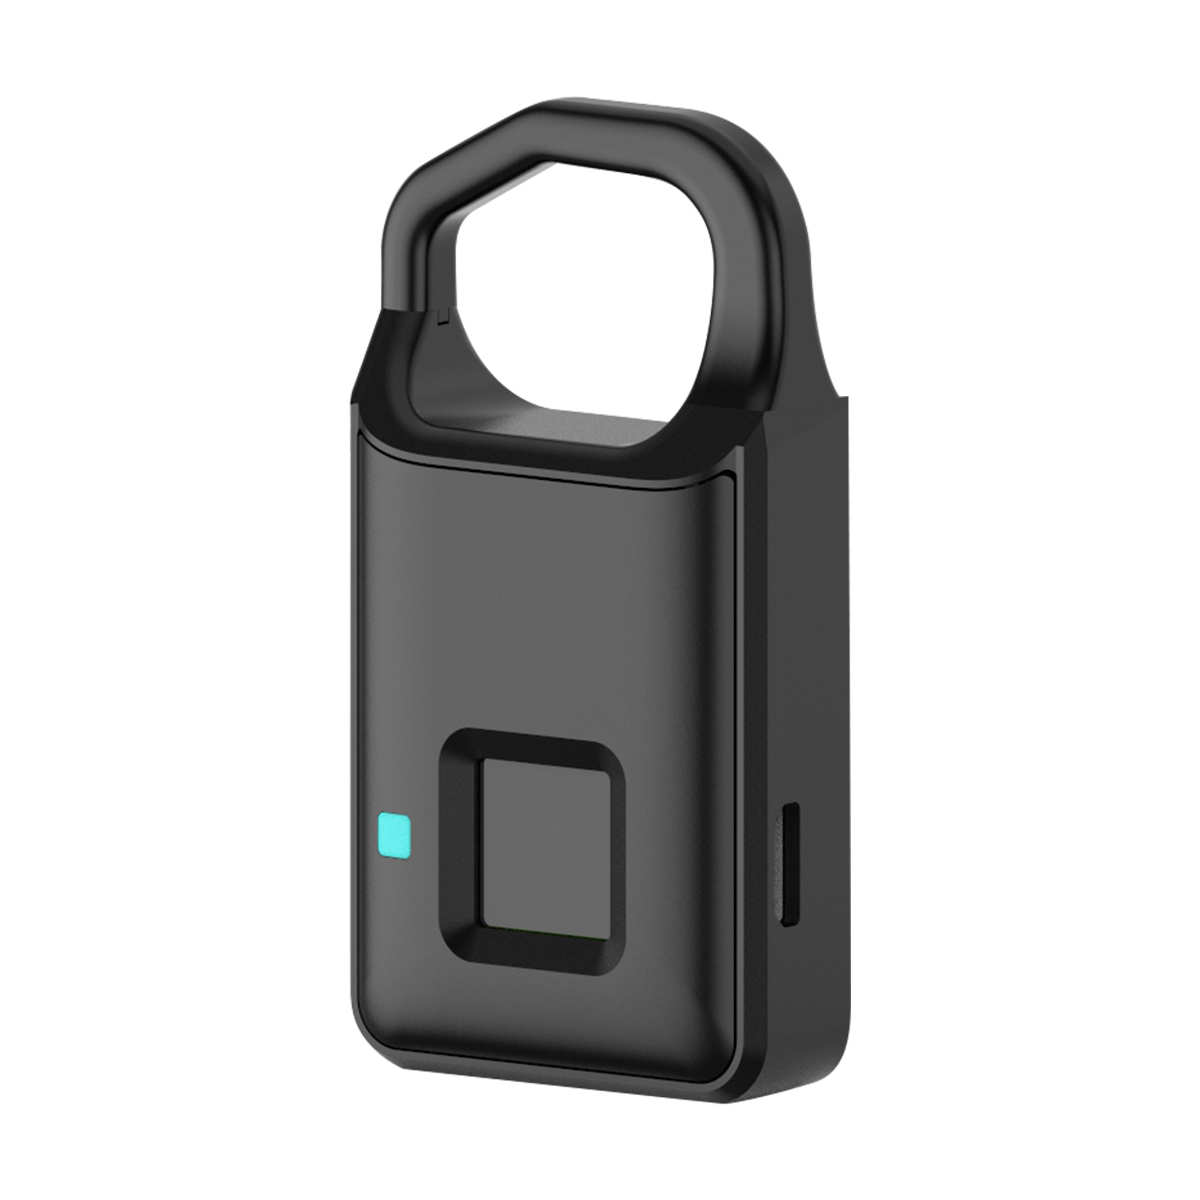 P4 USB Rechargeable Fingerprint Lock - Smart Keyless Anti-Theft Padlock, uitcase Door Lock Burglar Alarm Security Systems